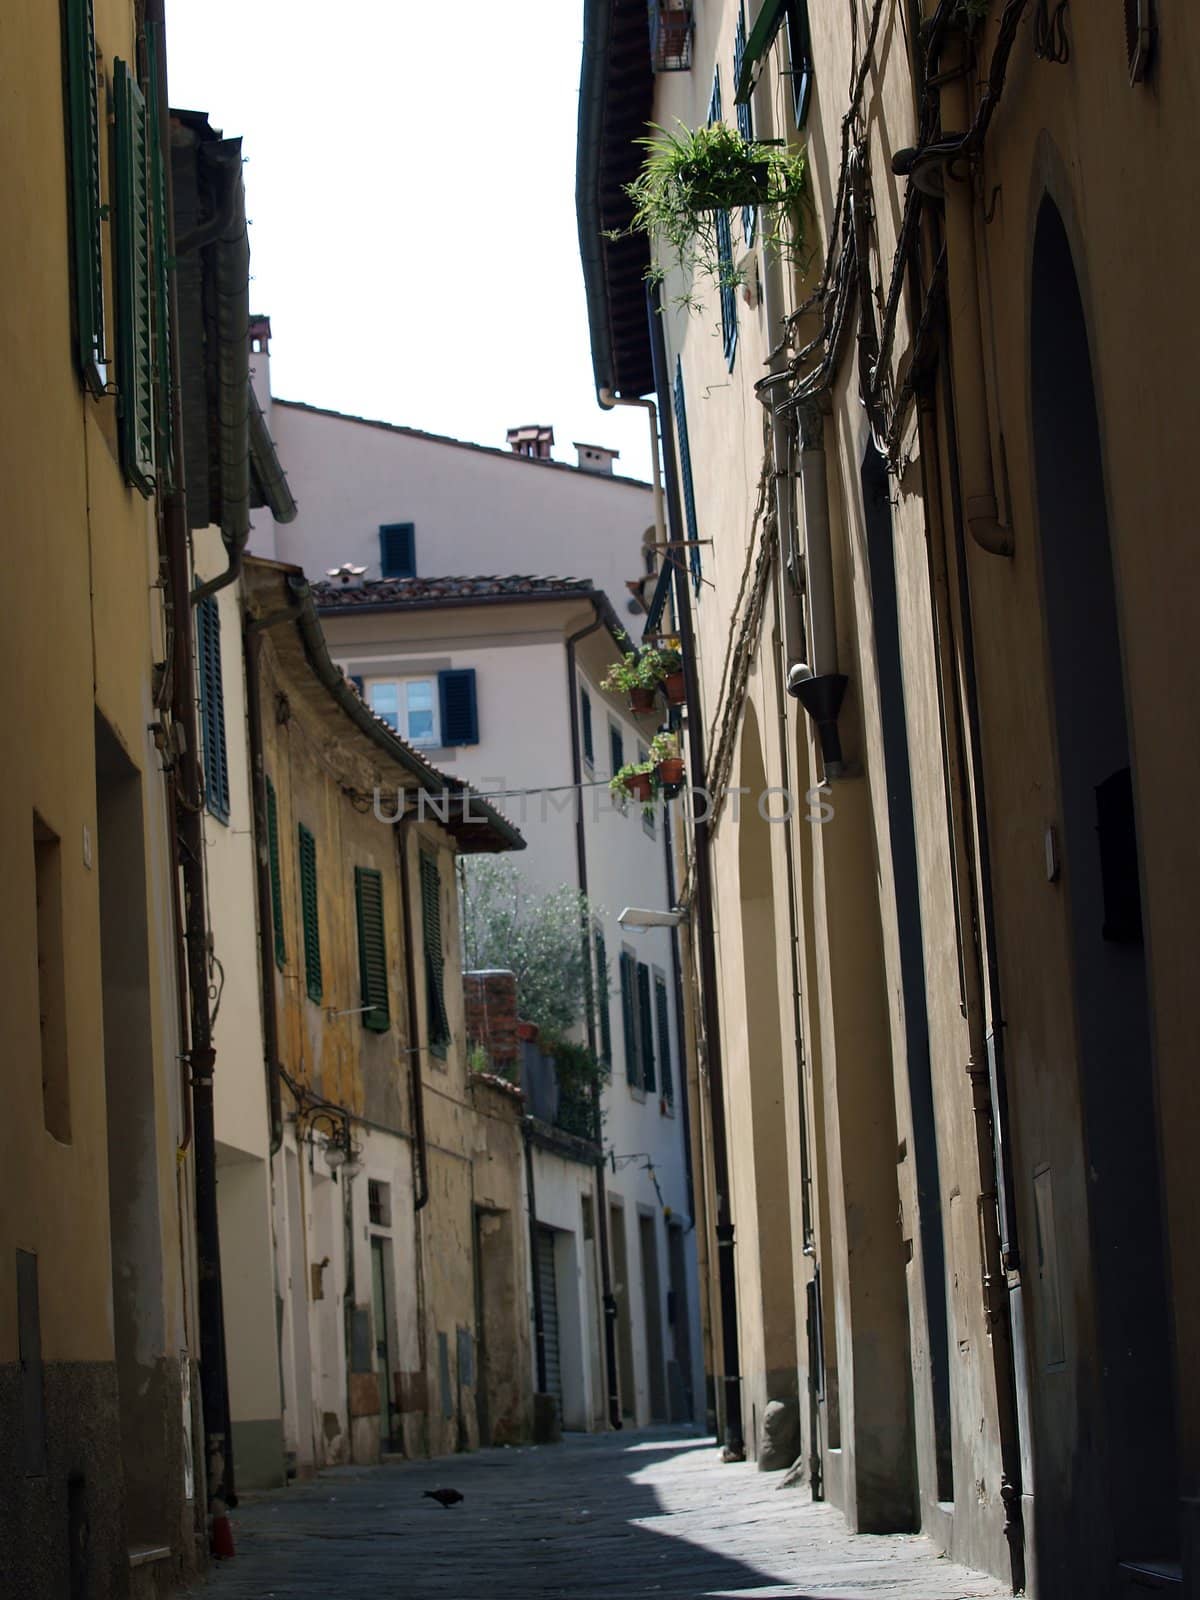 Deserted street of Venice Italy by wjarek